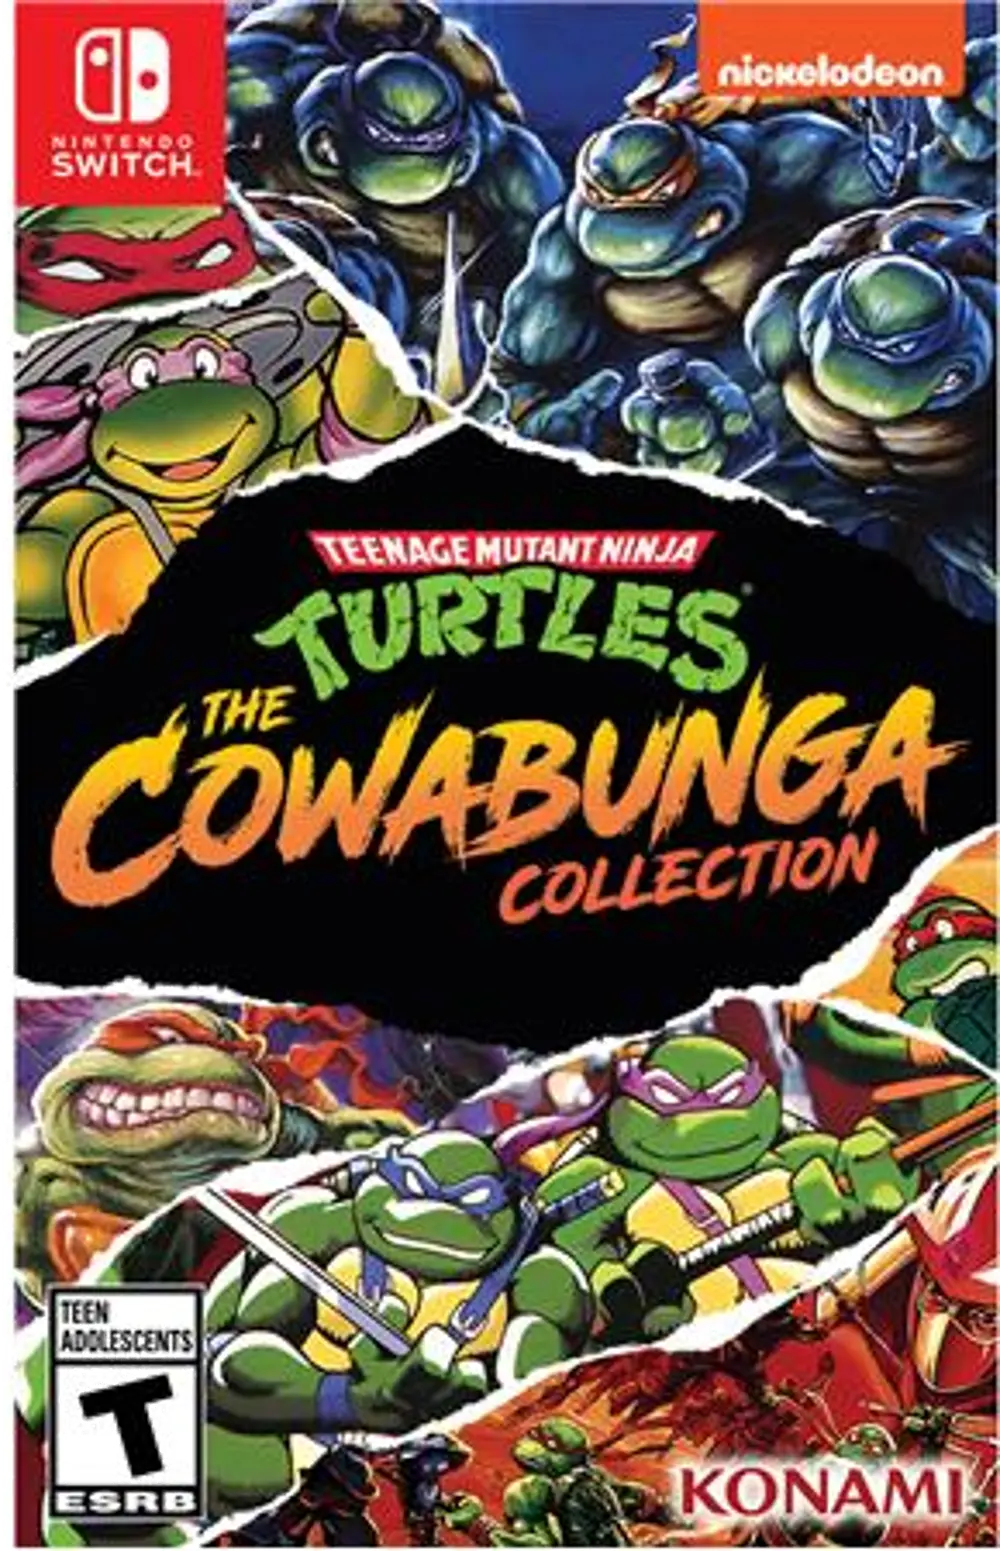 SWI/TMNT-COWABUNGA Teenage Mutant Ninja Turtles: The Cowabunga Collection - Nintendo Switch-1